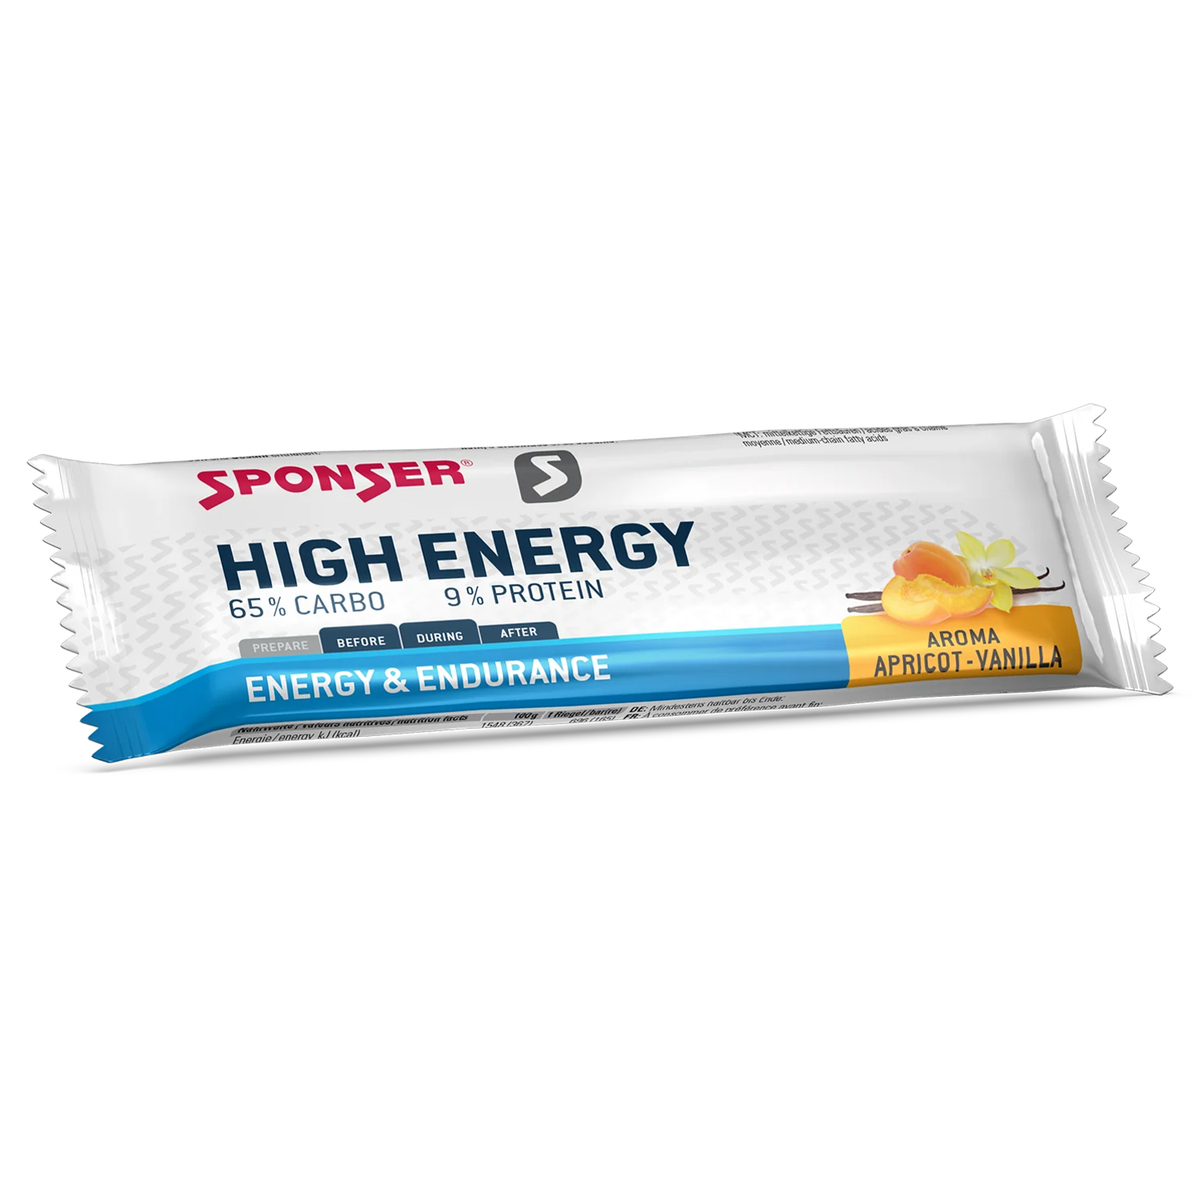 Sponser high energy